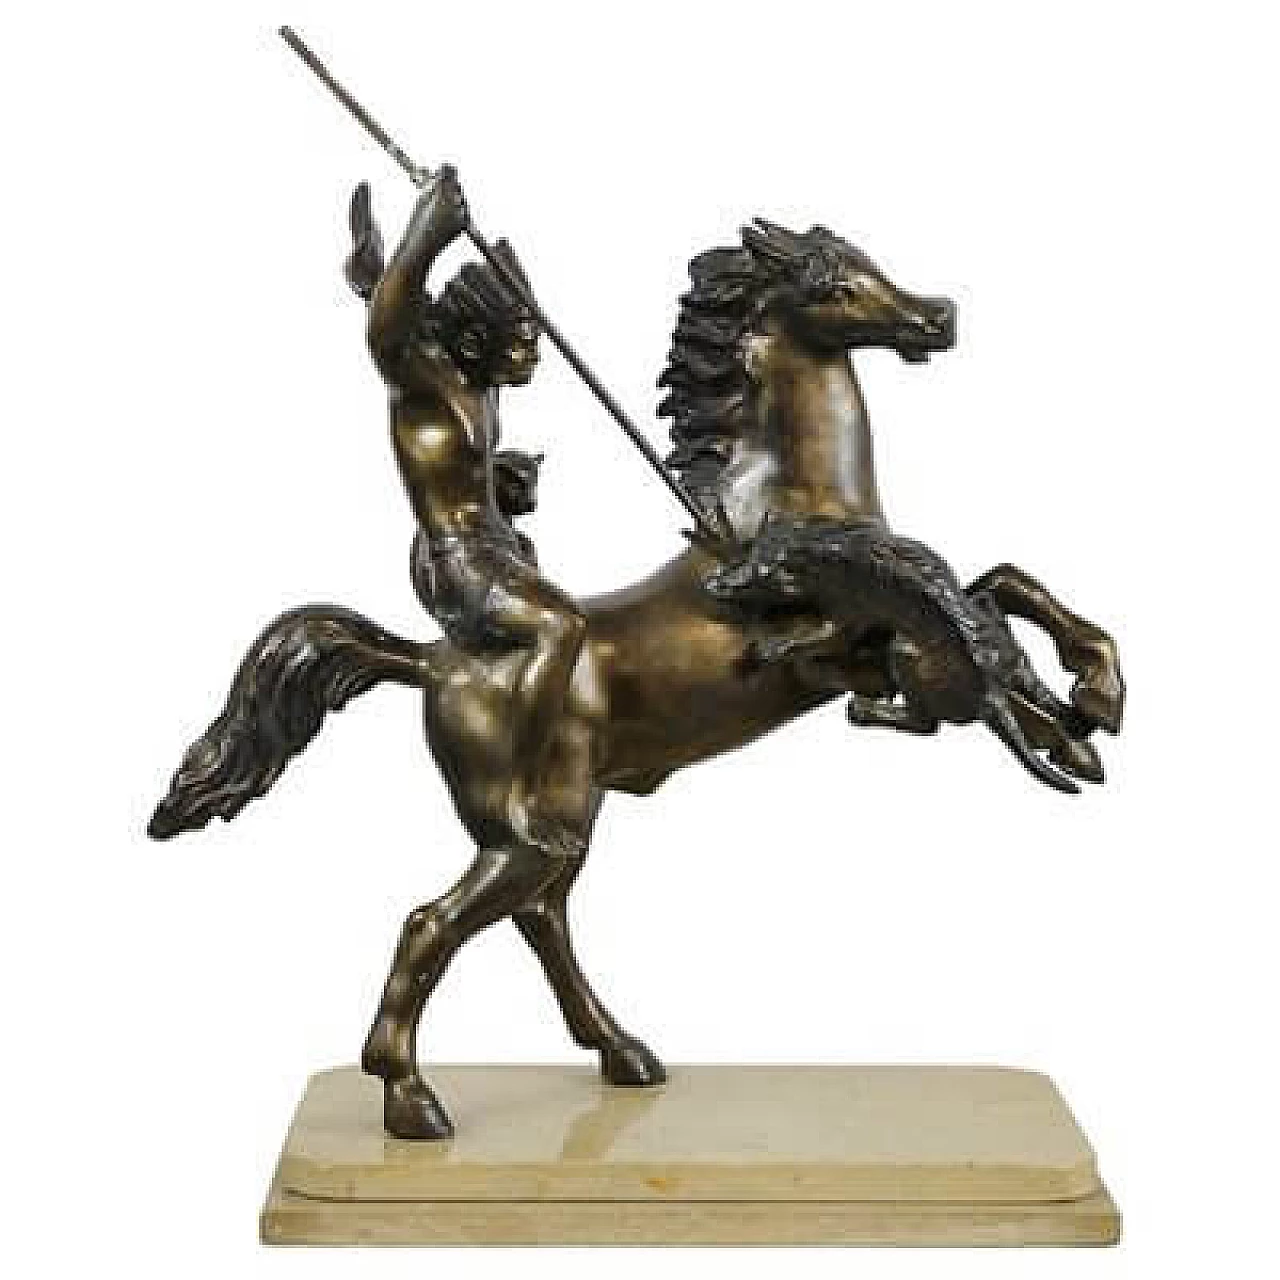 Indian warrior on horseback, reproduction after Tommaso Campajola, bronze sculpture 1